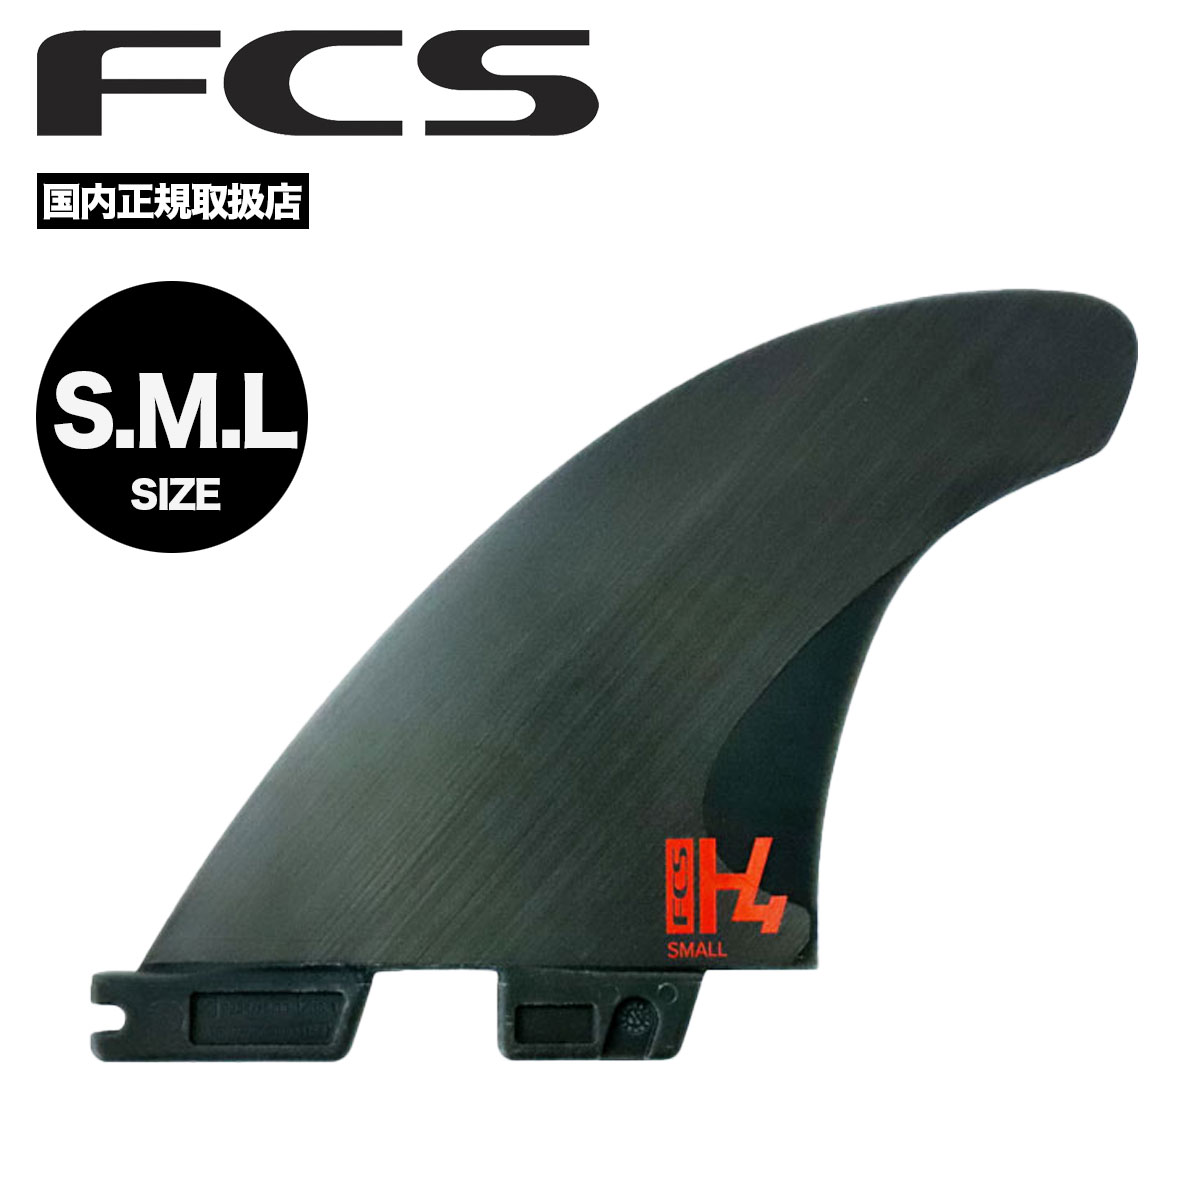 FCS2 FCS H4 fin 黒 Mサイズ スイス製 トライフィン FCSII